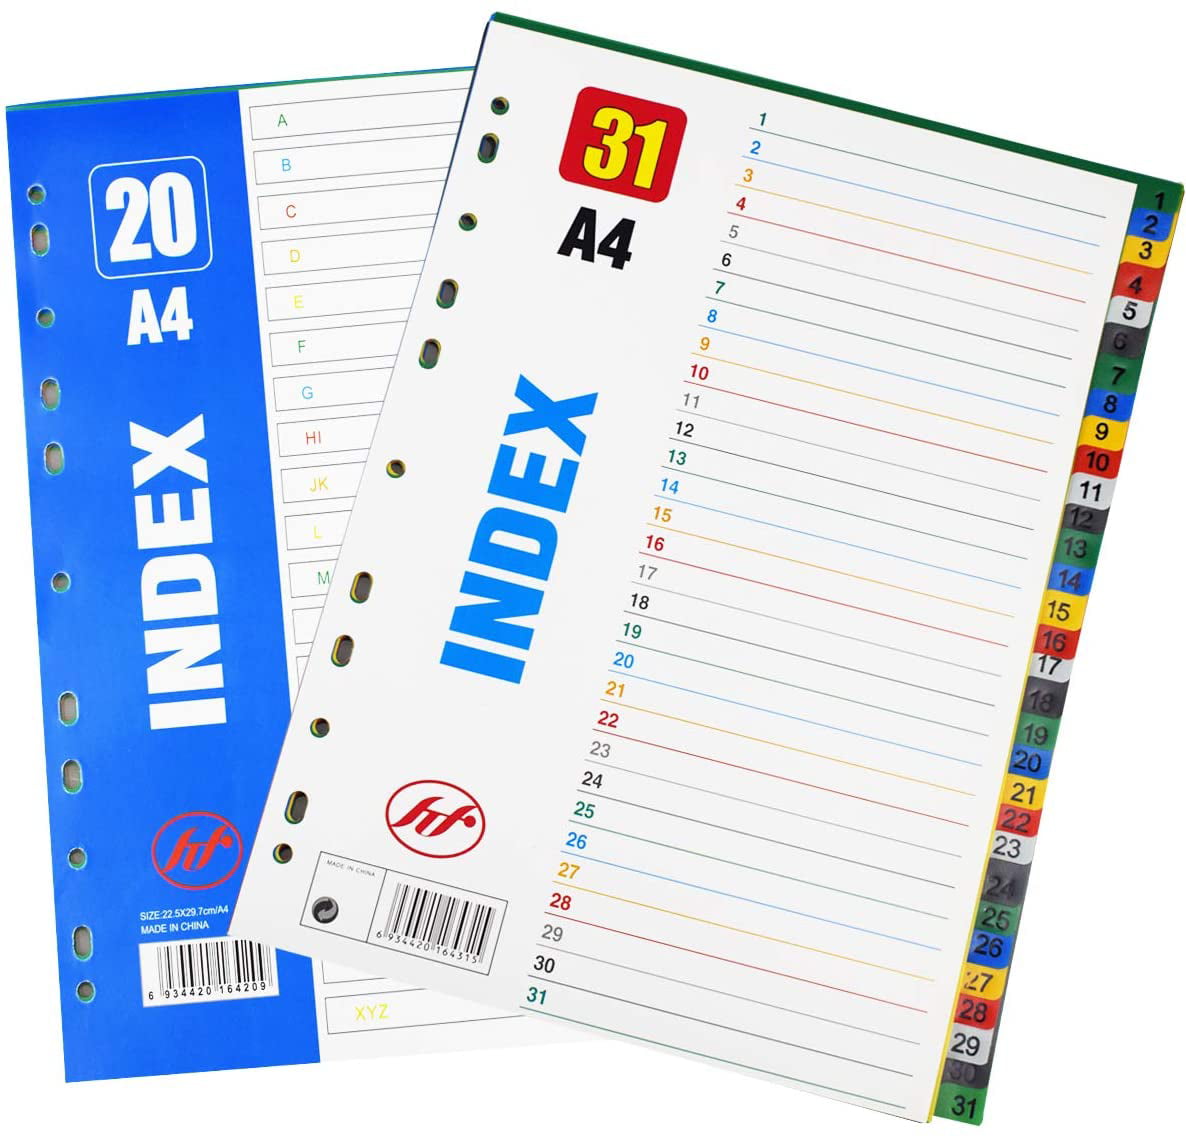 Plastic Folder Dividers Binder Index Dividers A4 PP Dividers File Dividers 20 Part & 31 Part for Office School by INTVN Multi-Coloured 2 Sets